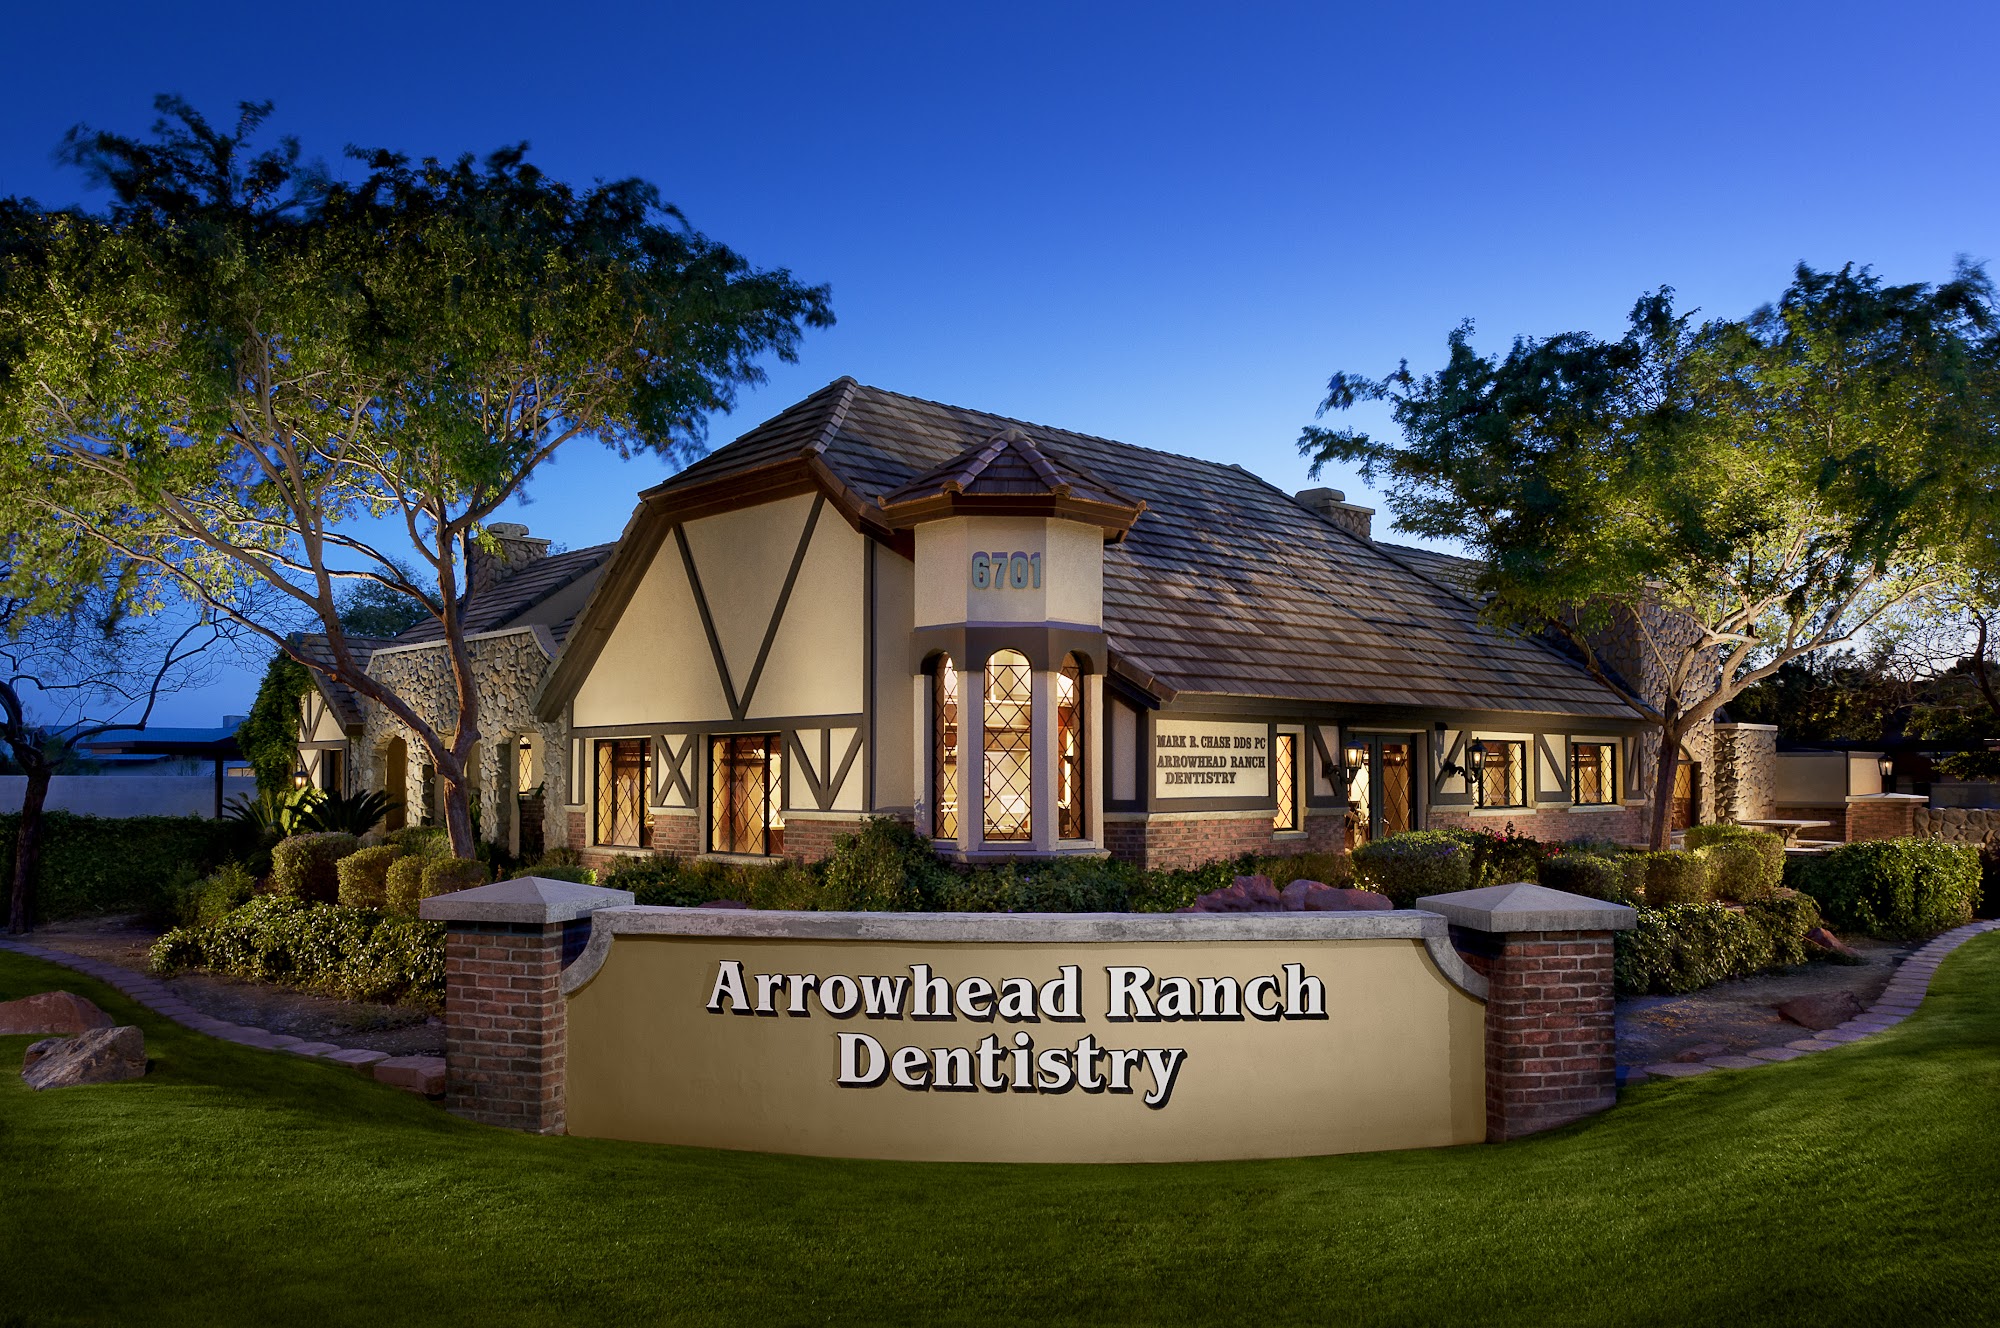 Arrowhead Ranch Dentistry